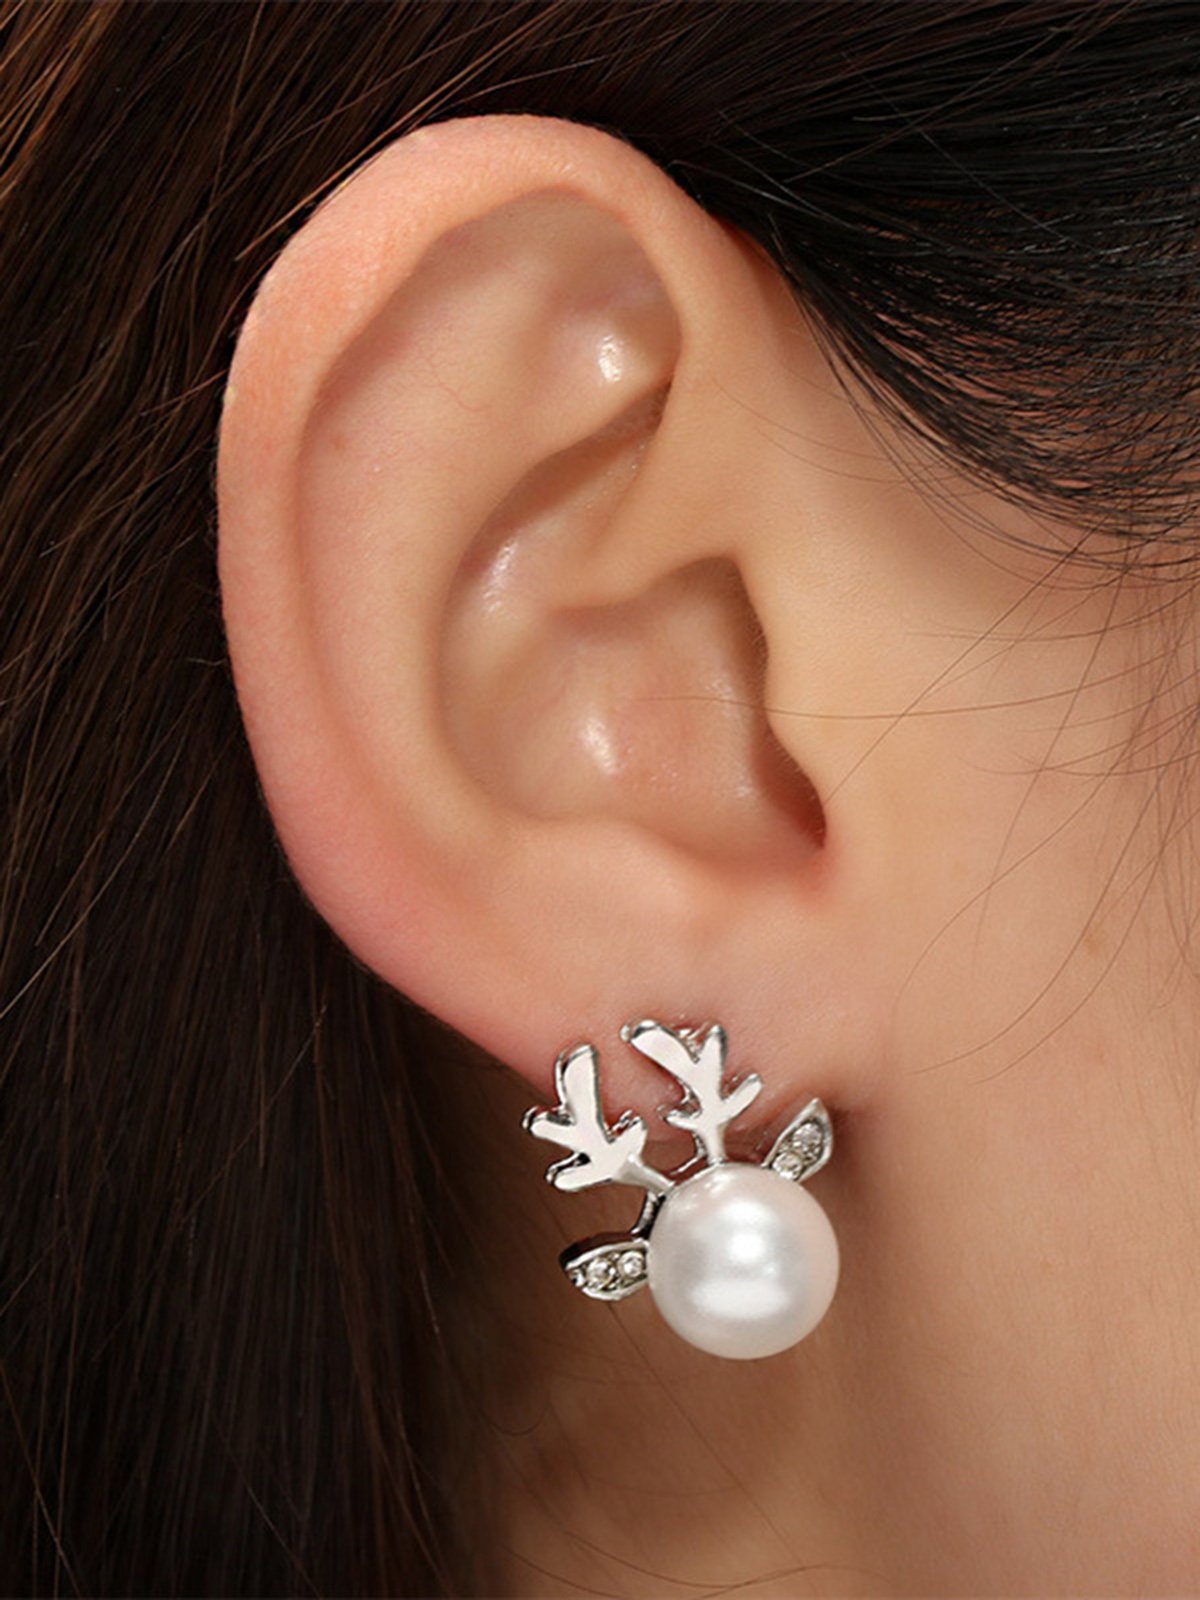 Christmas Elegant Imitation Pearl Antler Rhinestone Stud Earrings